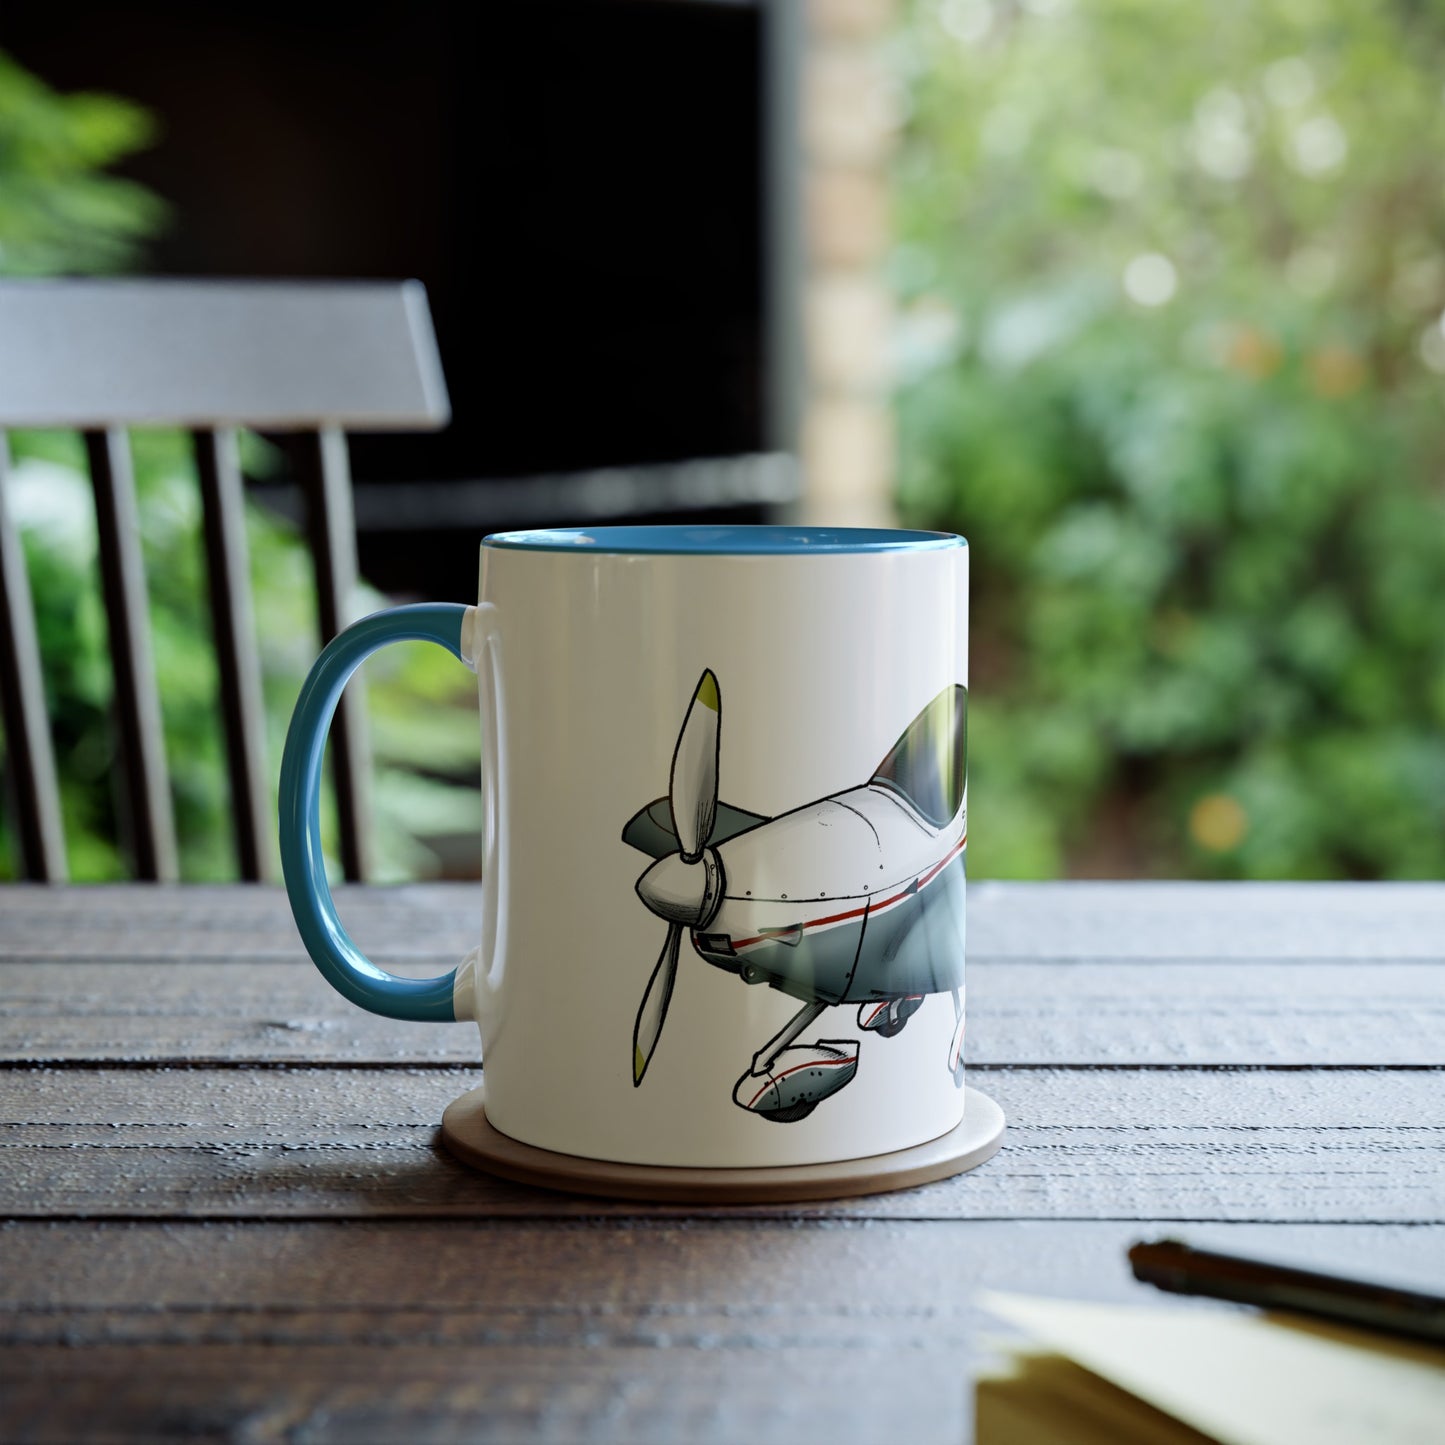 Sportcruiser Aircraft Two-Tone Coffee Mugs, 11oz